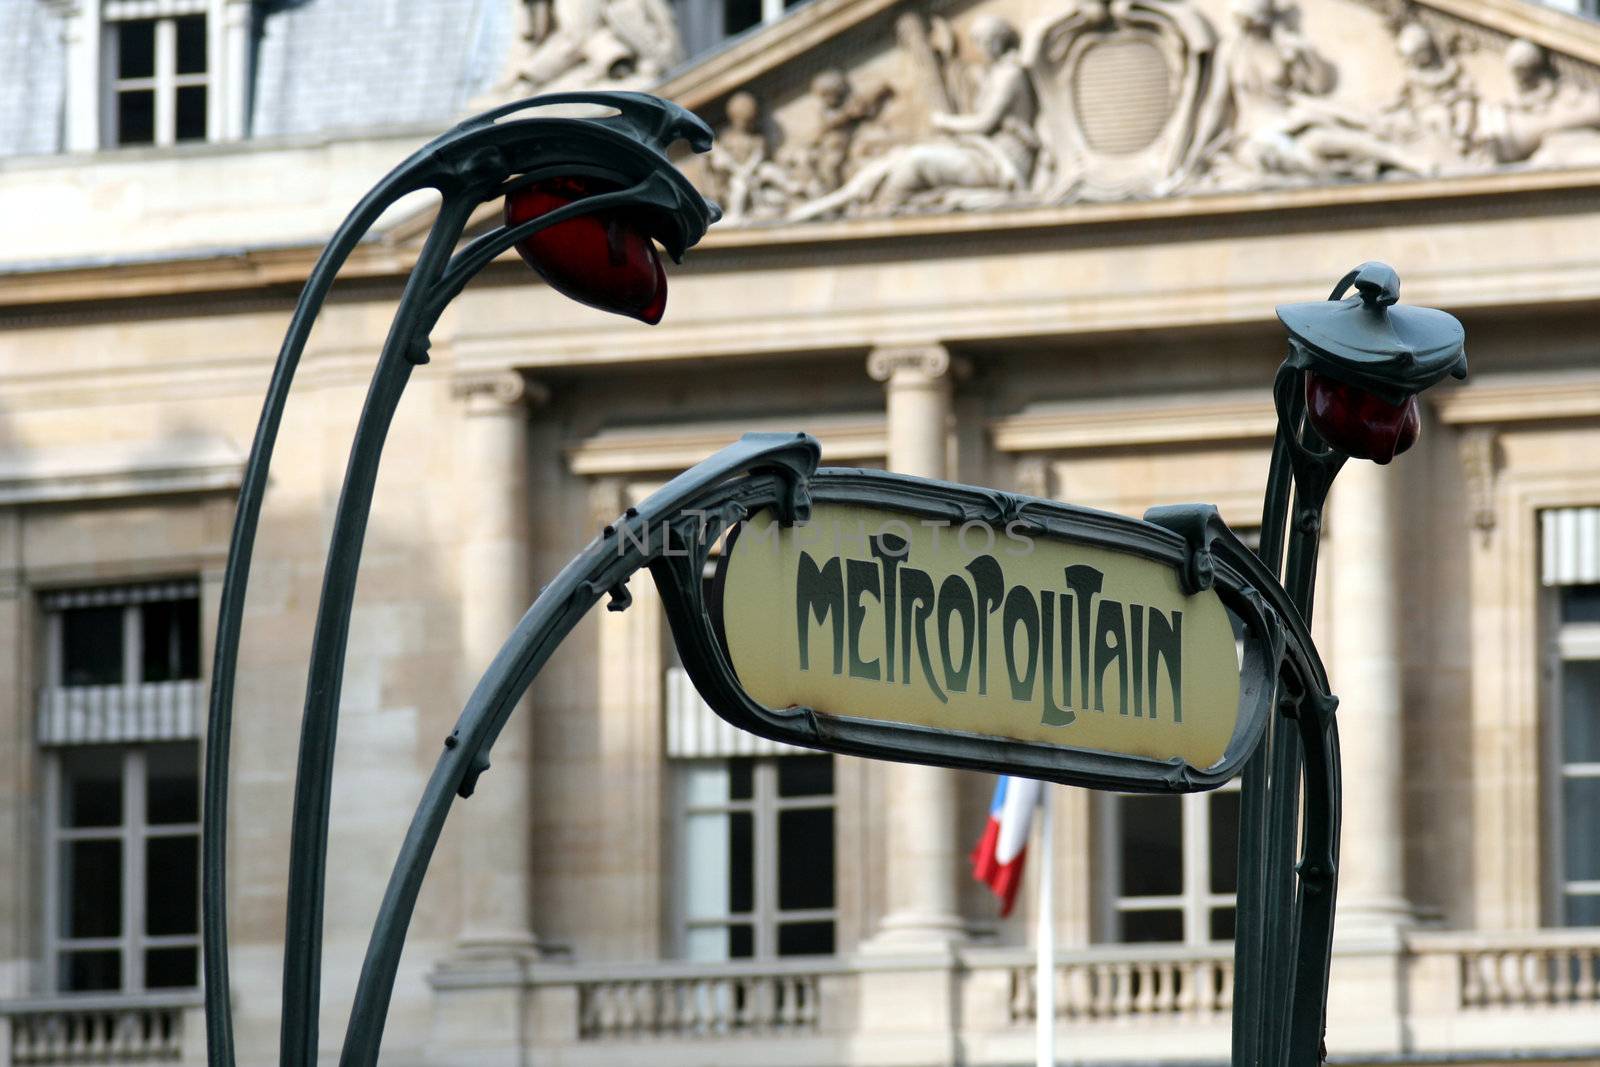 Metropolitain by gautier